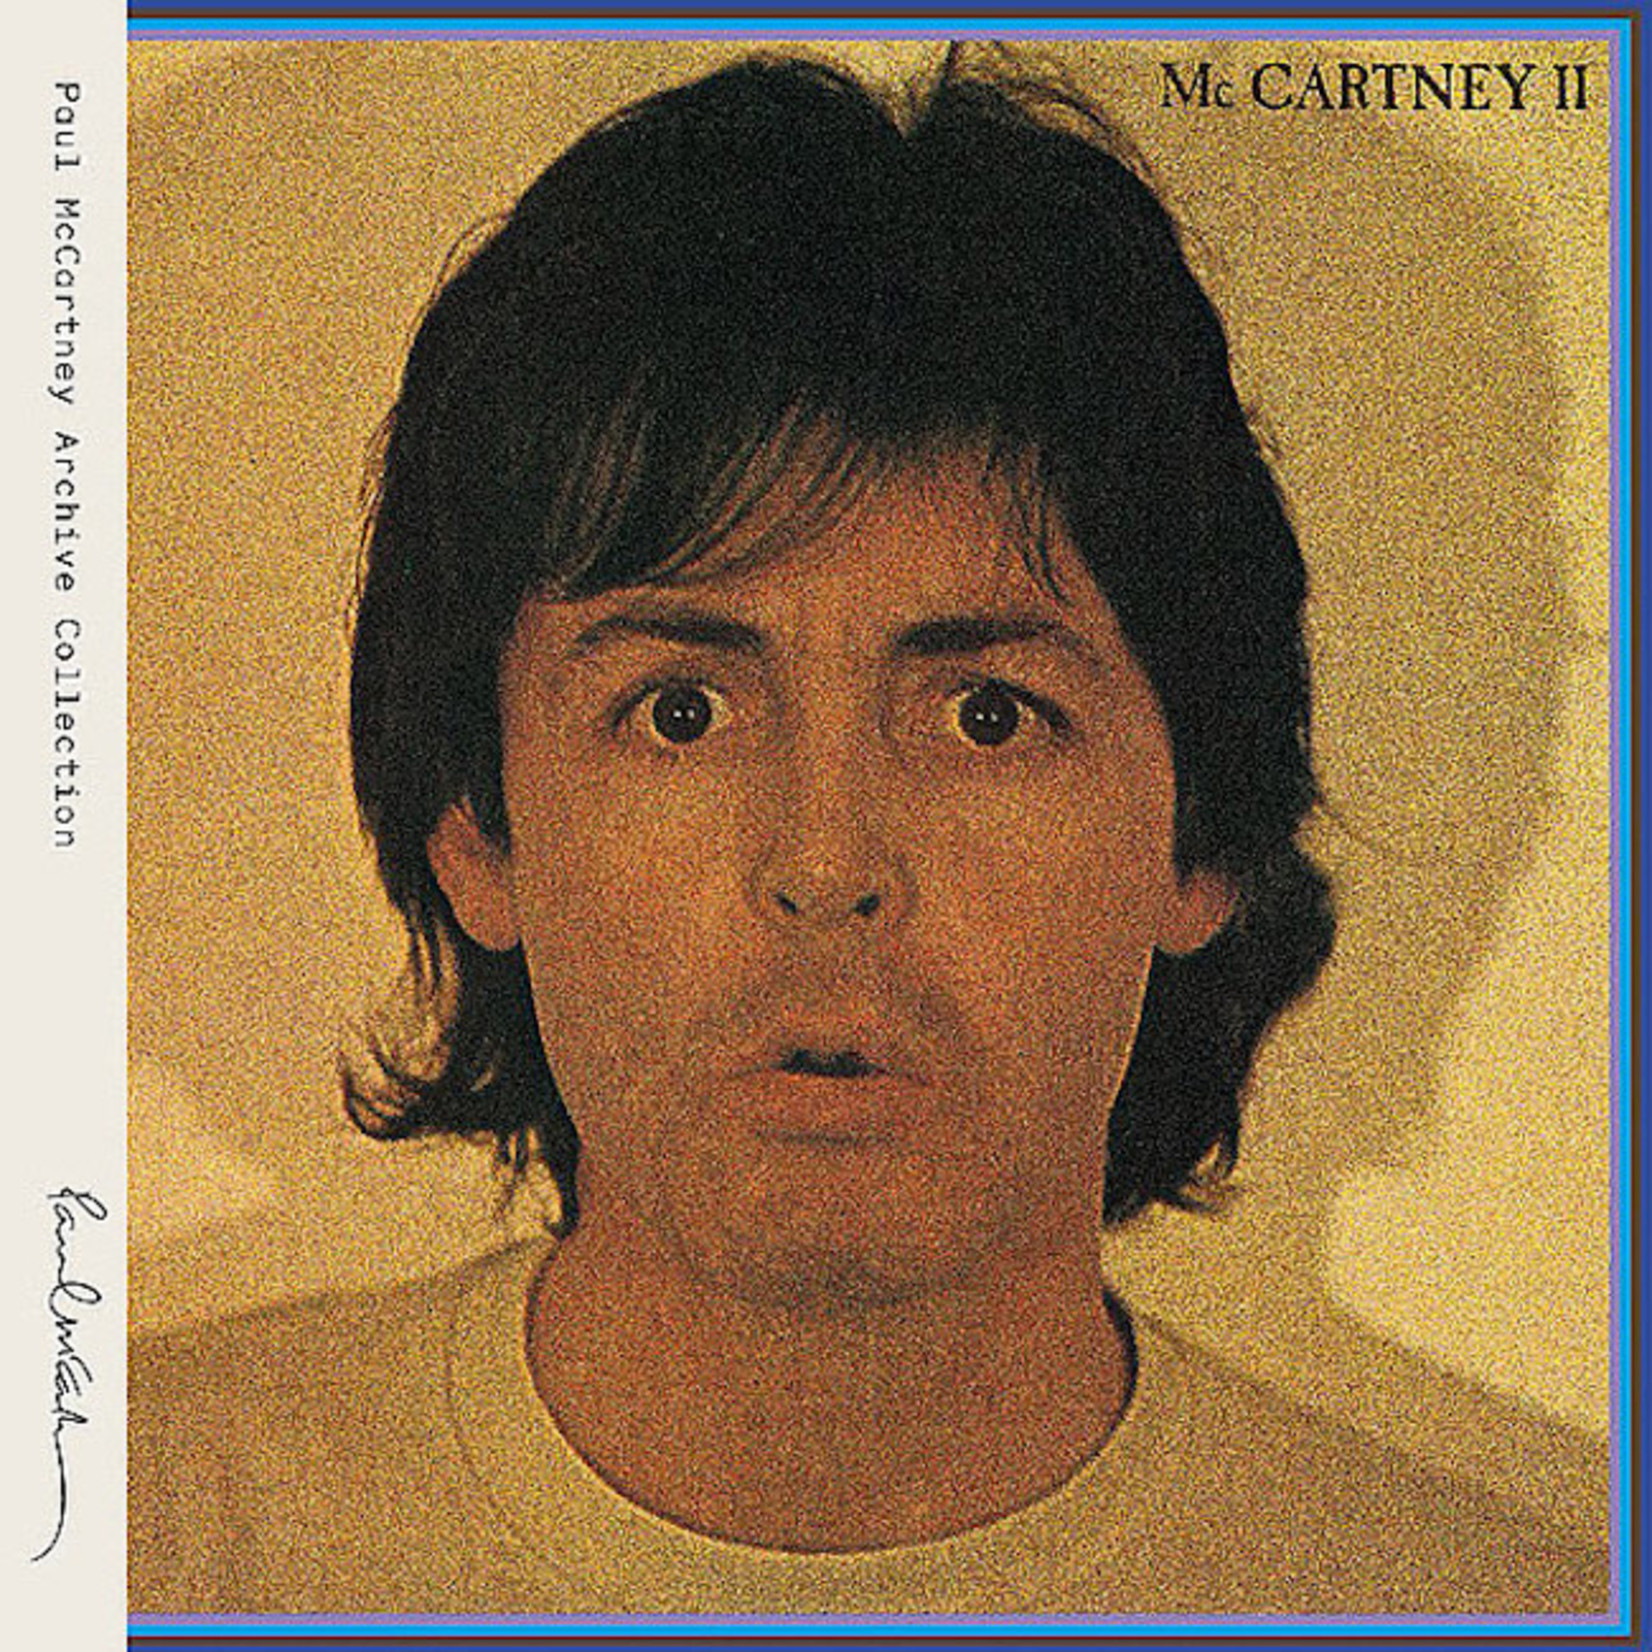 [Vintage] Paul McCartney - McCartney II